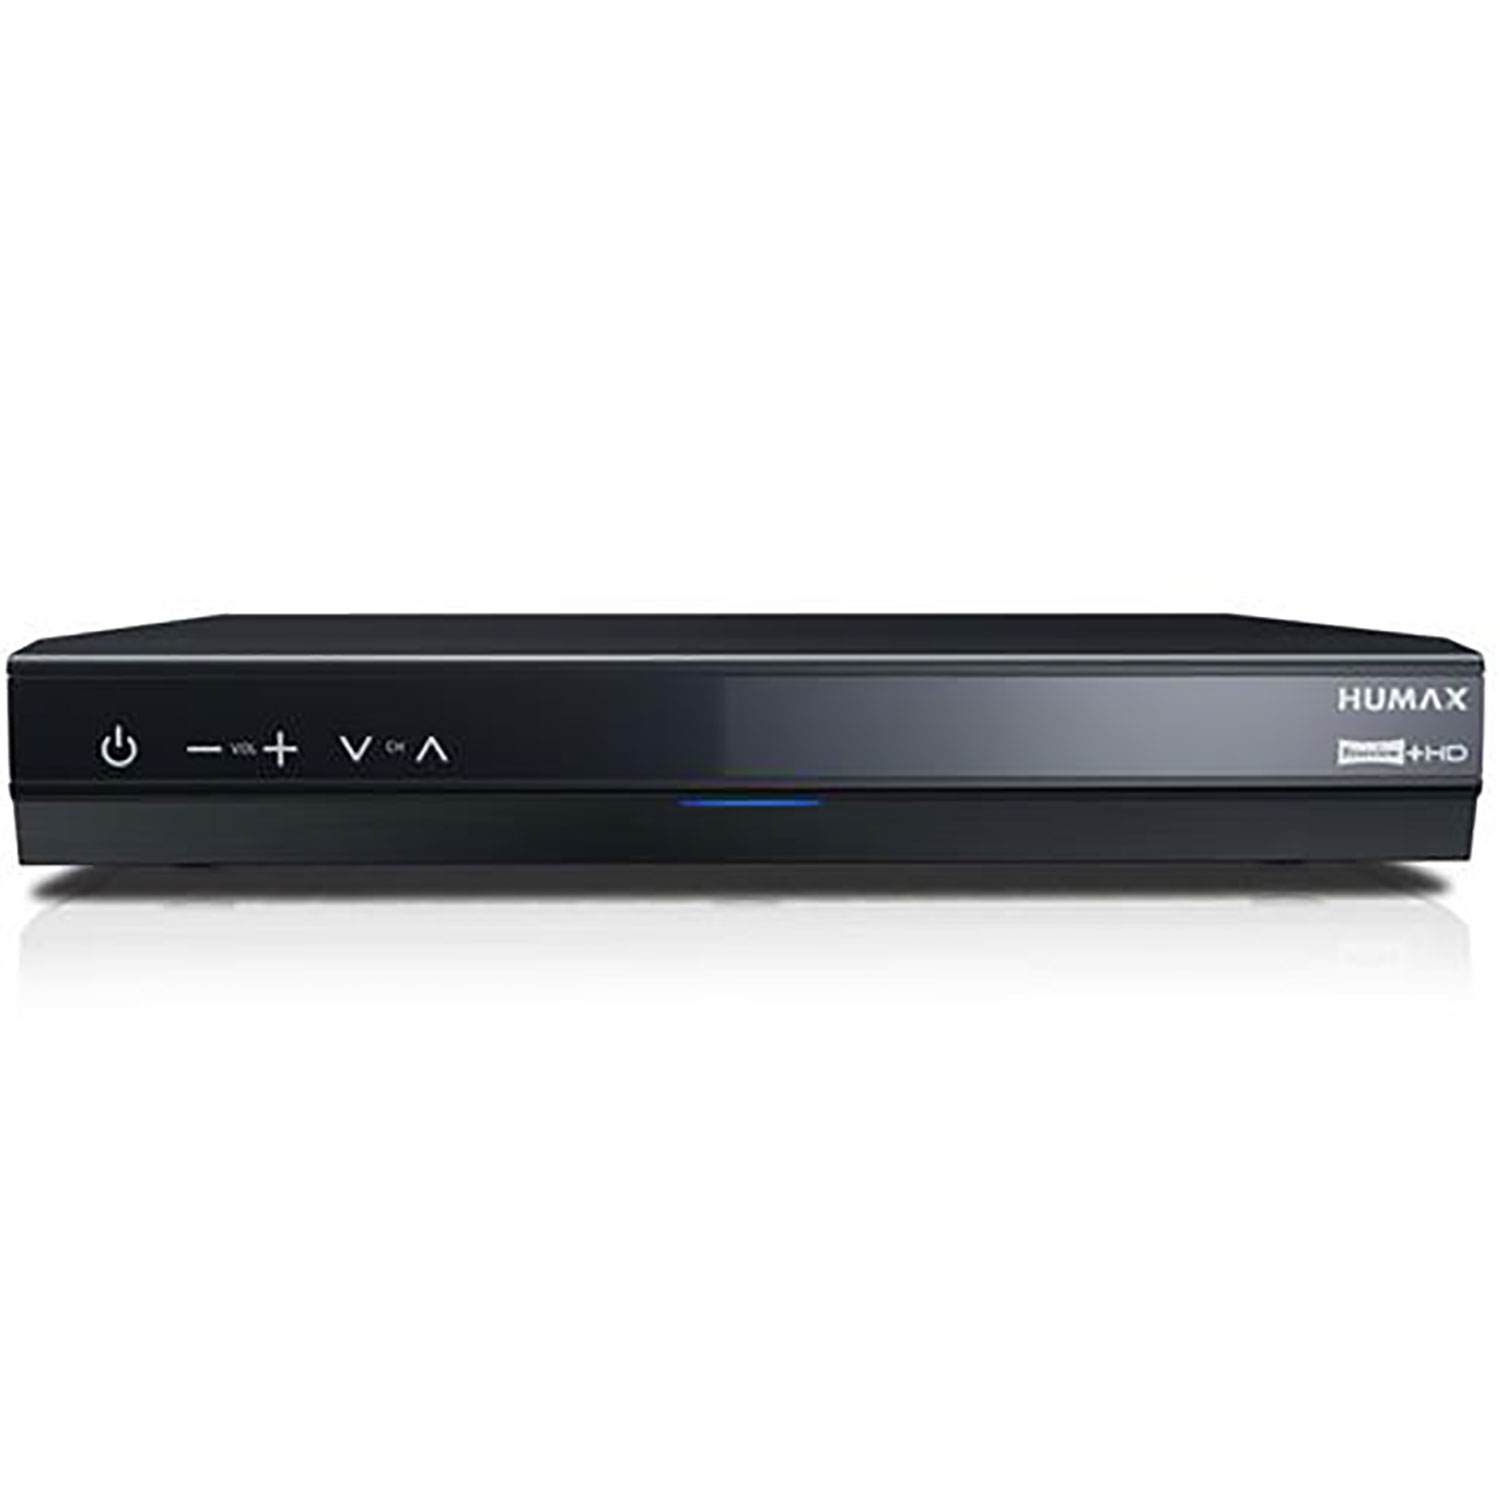 Humax HDR 1800T 320 Digital Video Recorder - 320 GB HDD -Freeview-Smart - Set Top Box- Black - 0